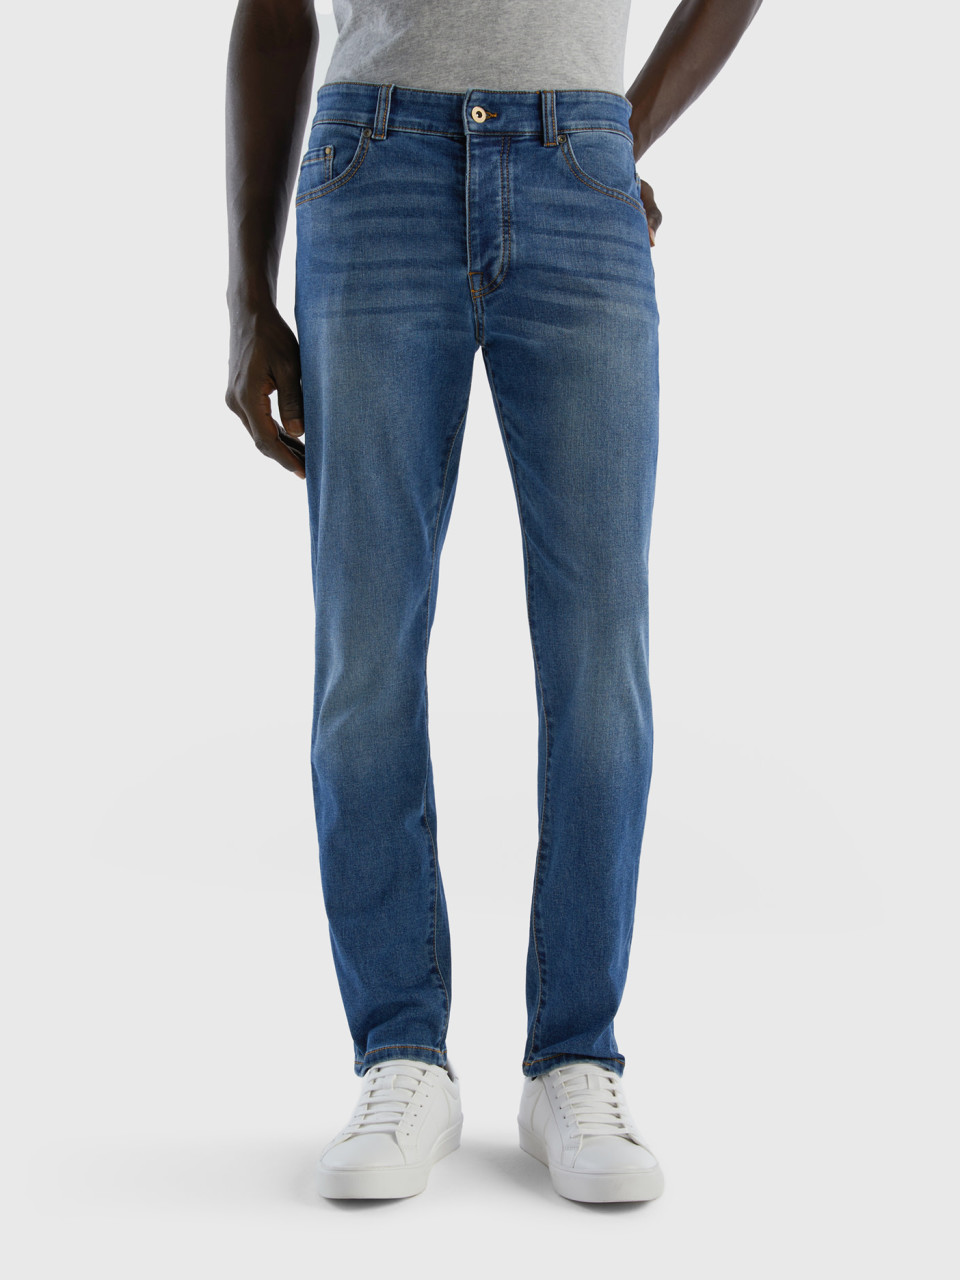 Benetton, Five Pocket Slim Fit Jeans, Blue, Men